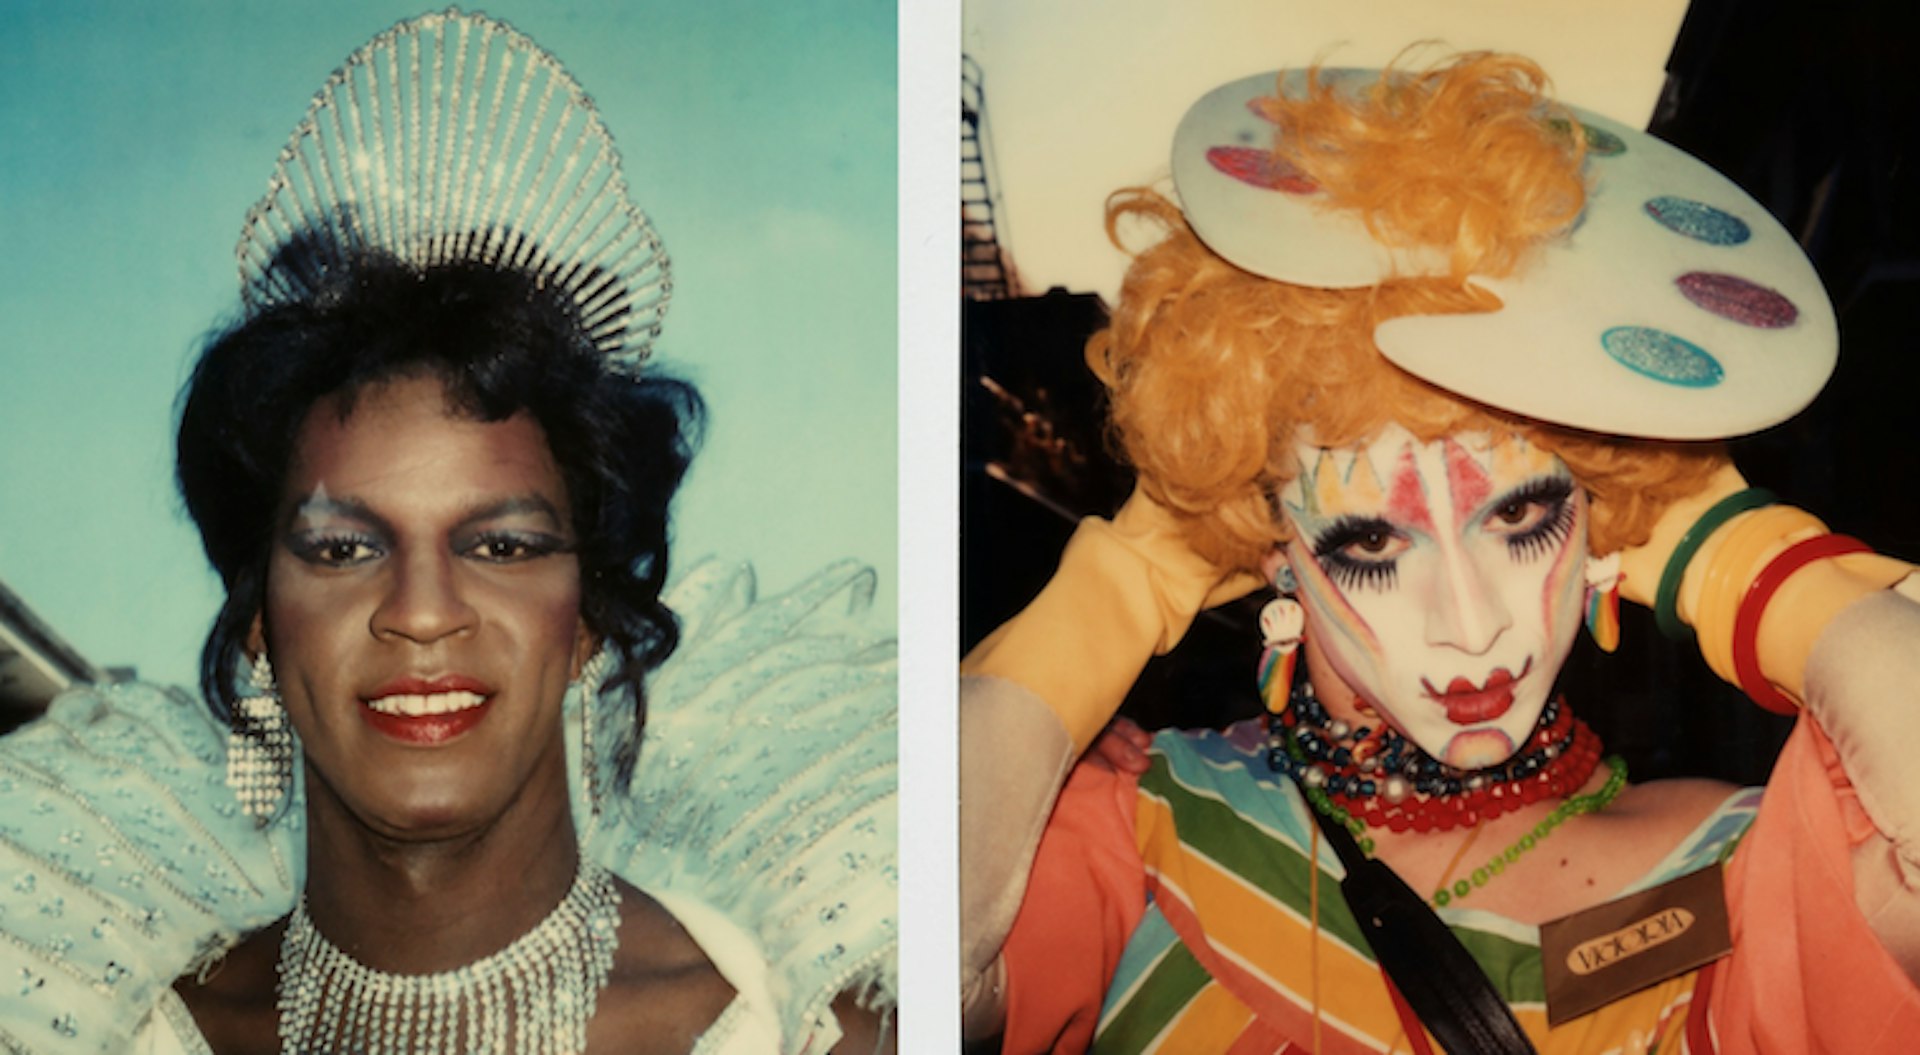 A kaleidoscopic portrait of New Orleans Mardi Gras ‘79